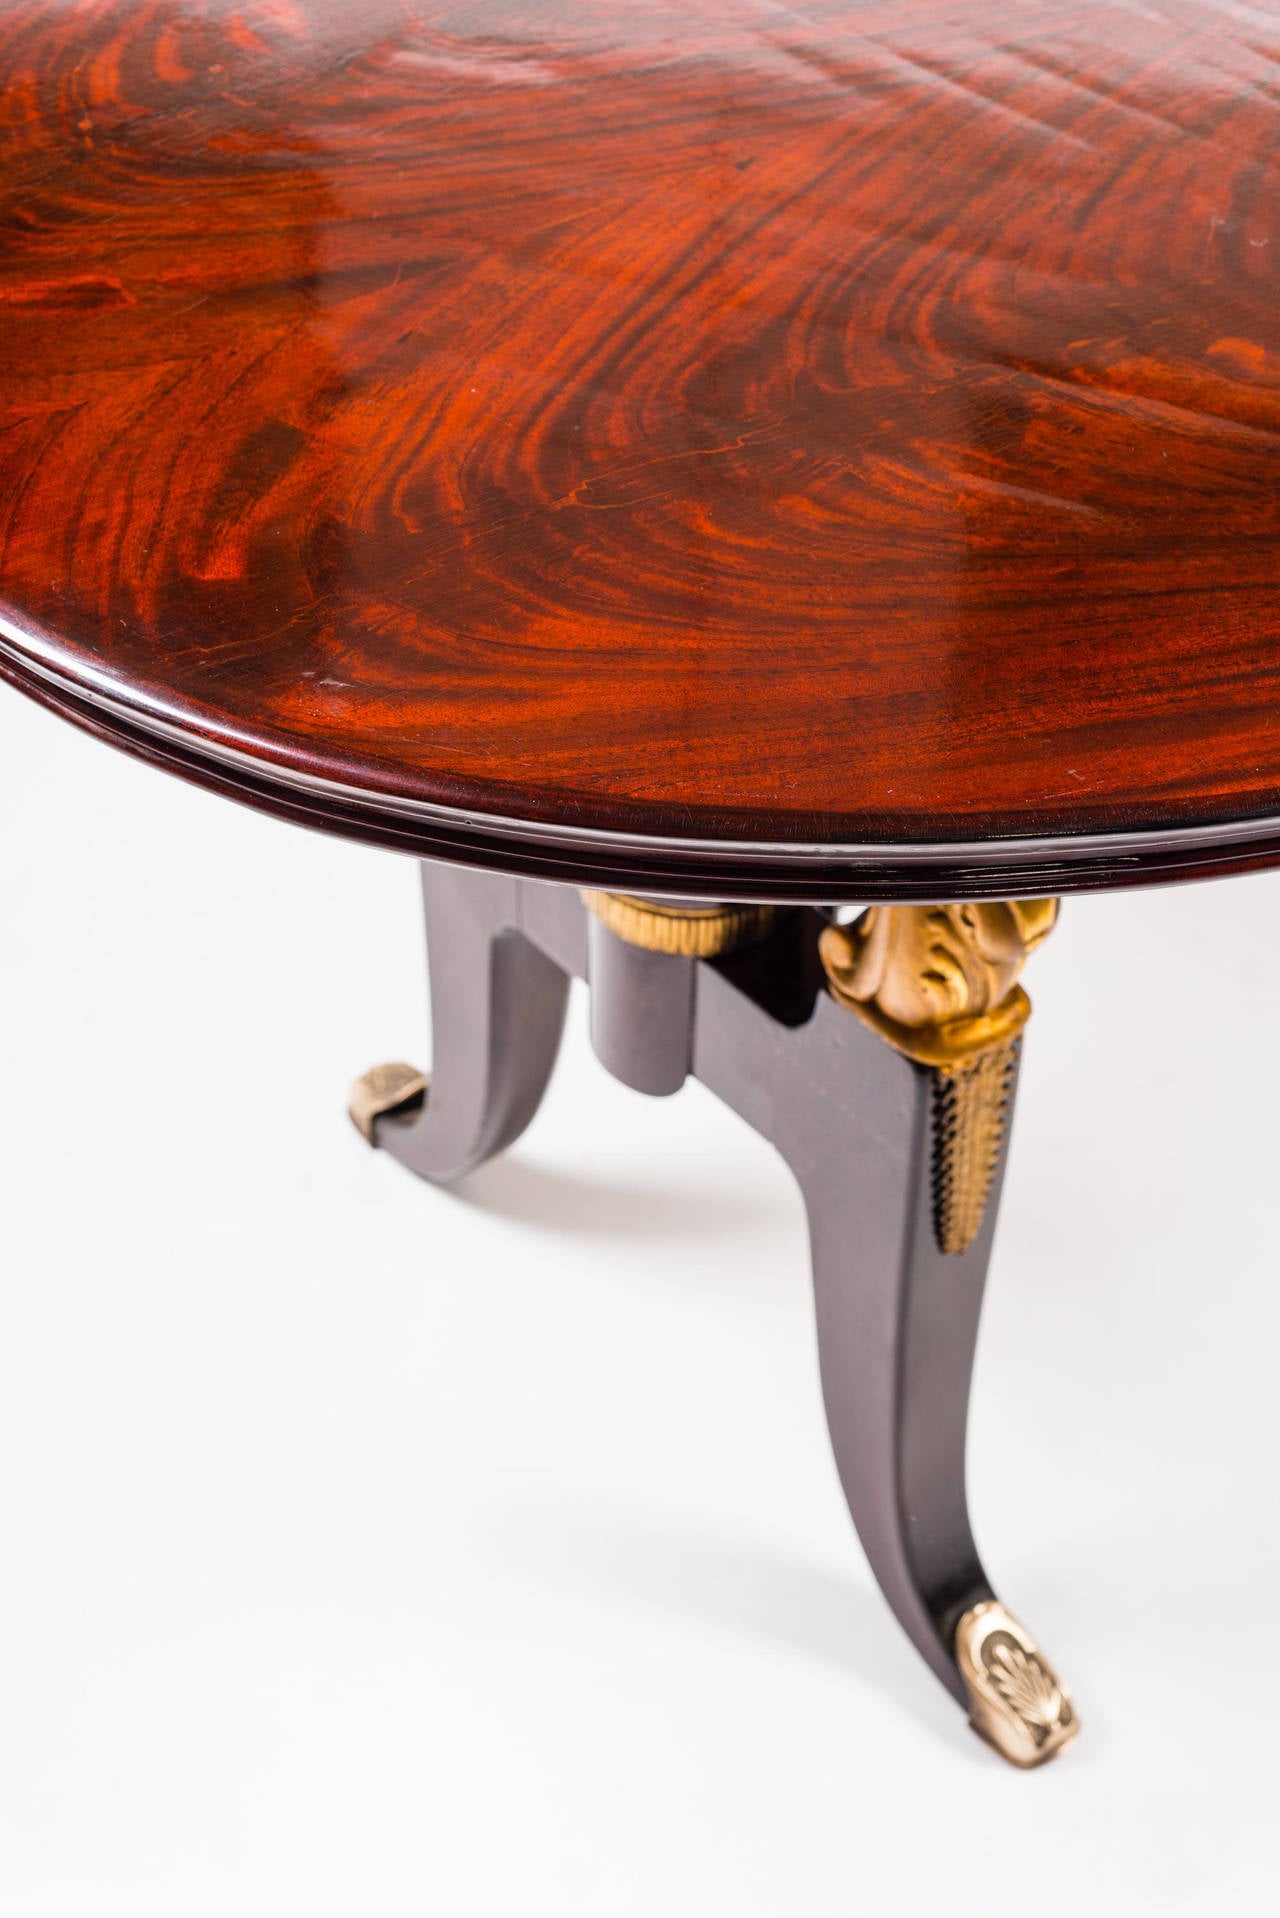 Mid-20th Century Midcentury Italian Mahogany Table in the Style of Paolo Buffa, 1950s For Sale